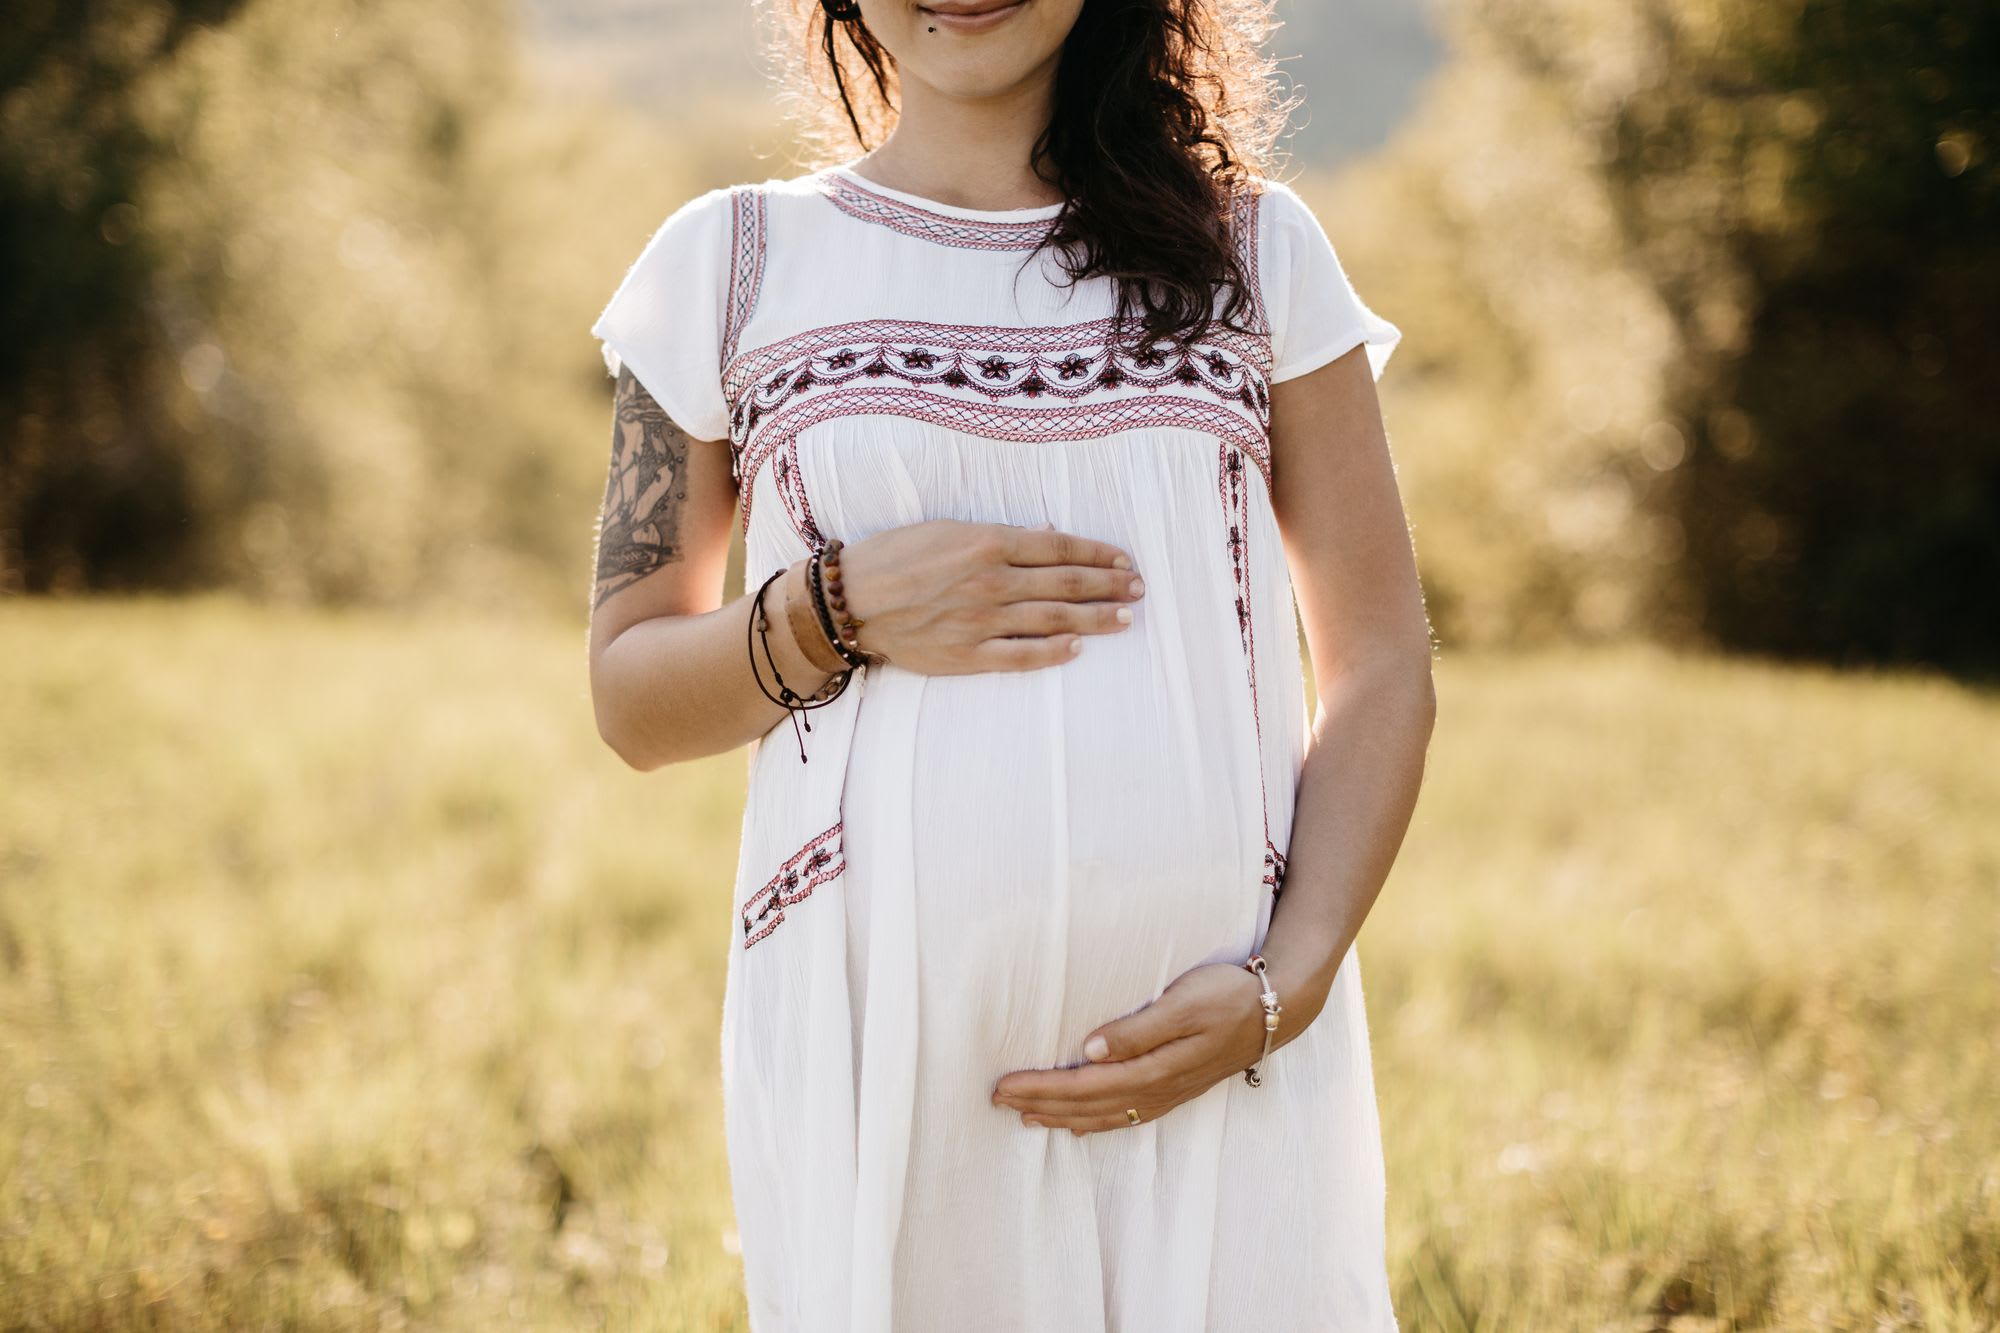 Tattoo stechen während der Schwangerschaft: Geht das?